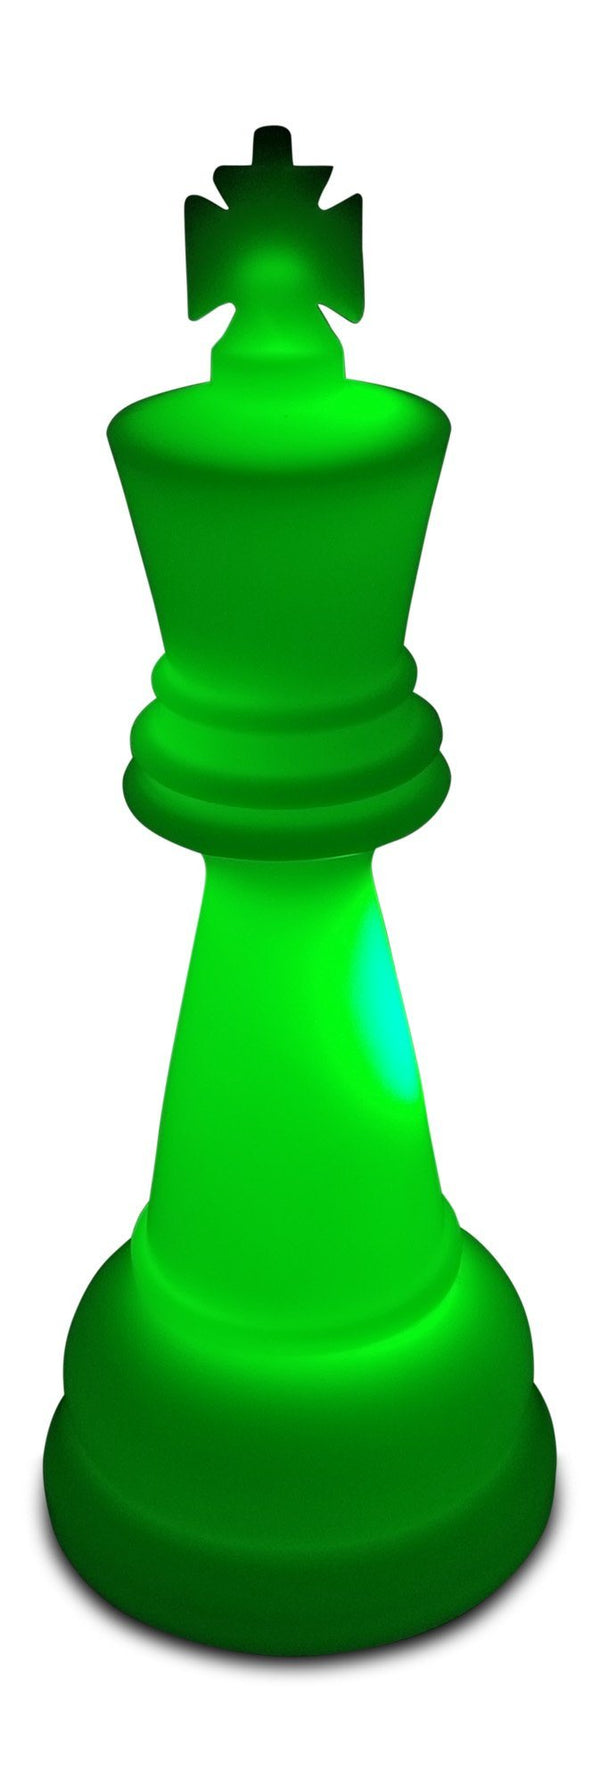 MegaChess 38 Inch Perfect King Light-Up Giant Chess Piece - Green | Default Title | MegaChess.com